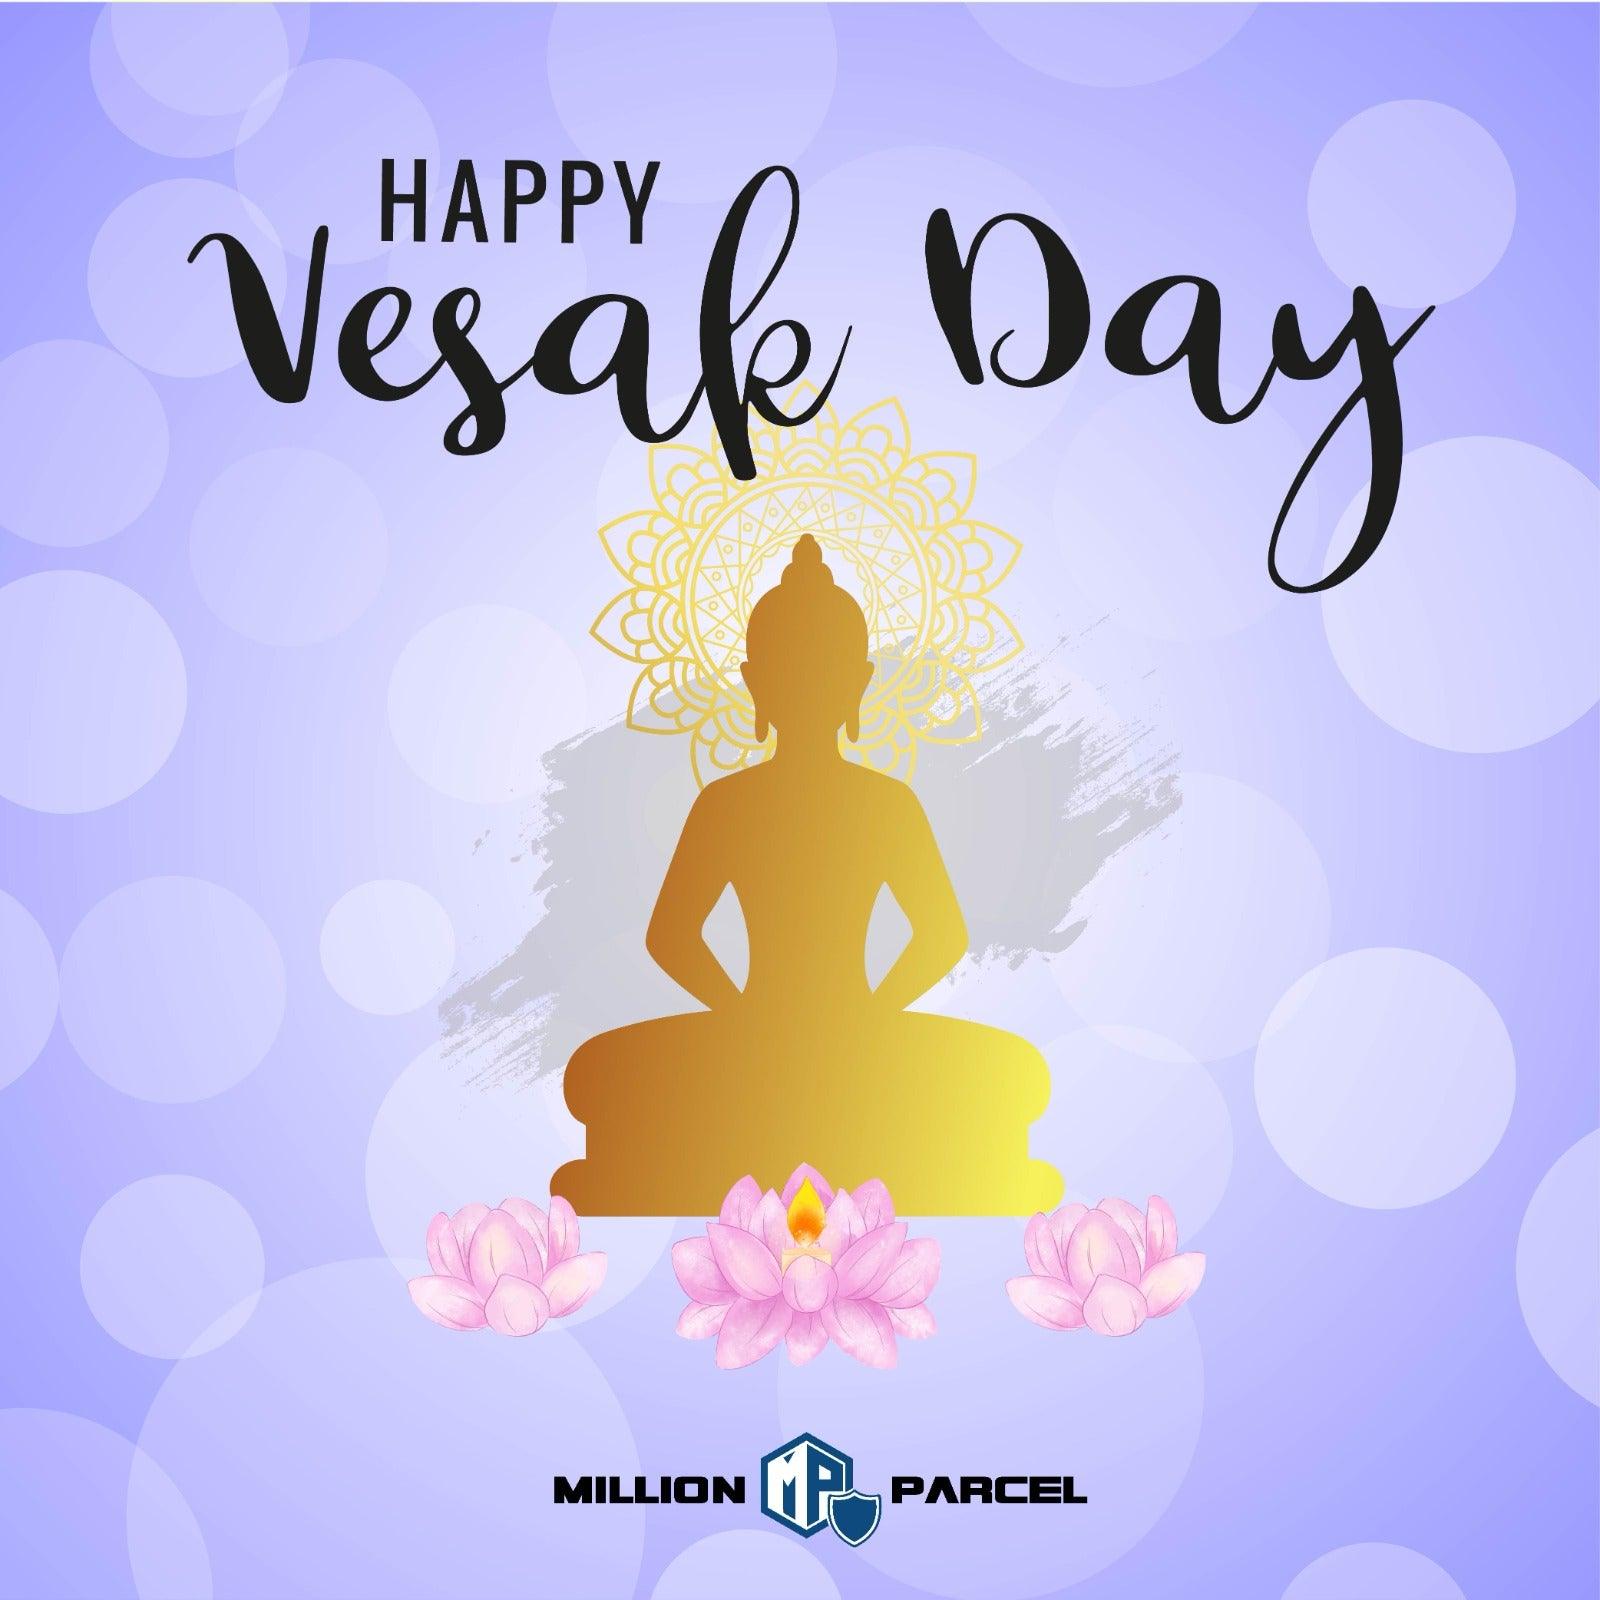 Happy Vesak Day - MillionParcel